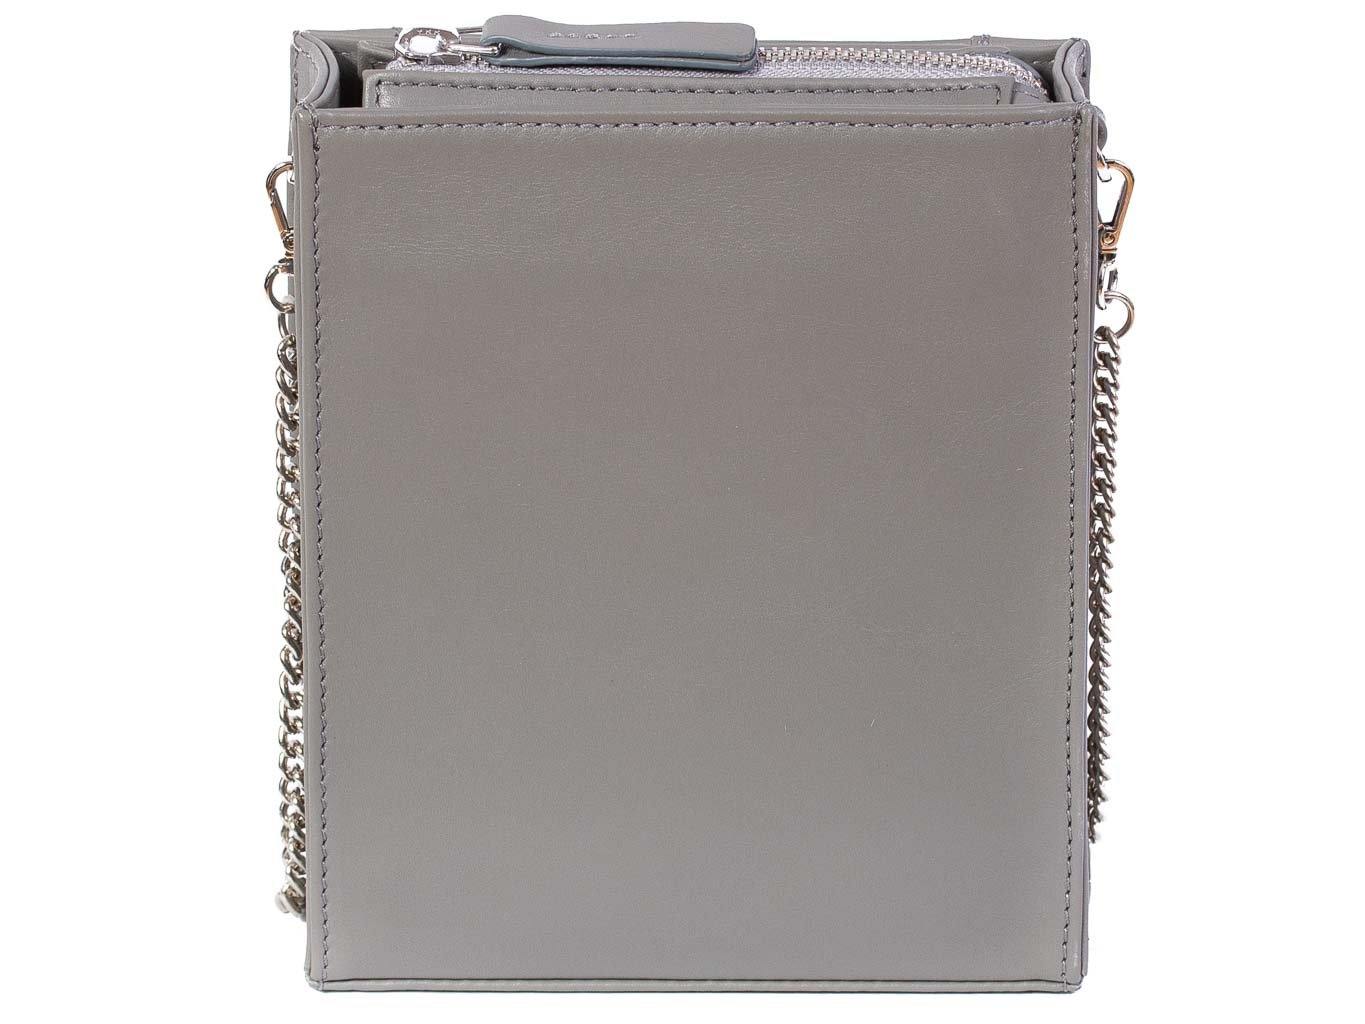 Messenger Springbok Handbag in Slate Grey with a stripe feature by Sherene Melinda back